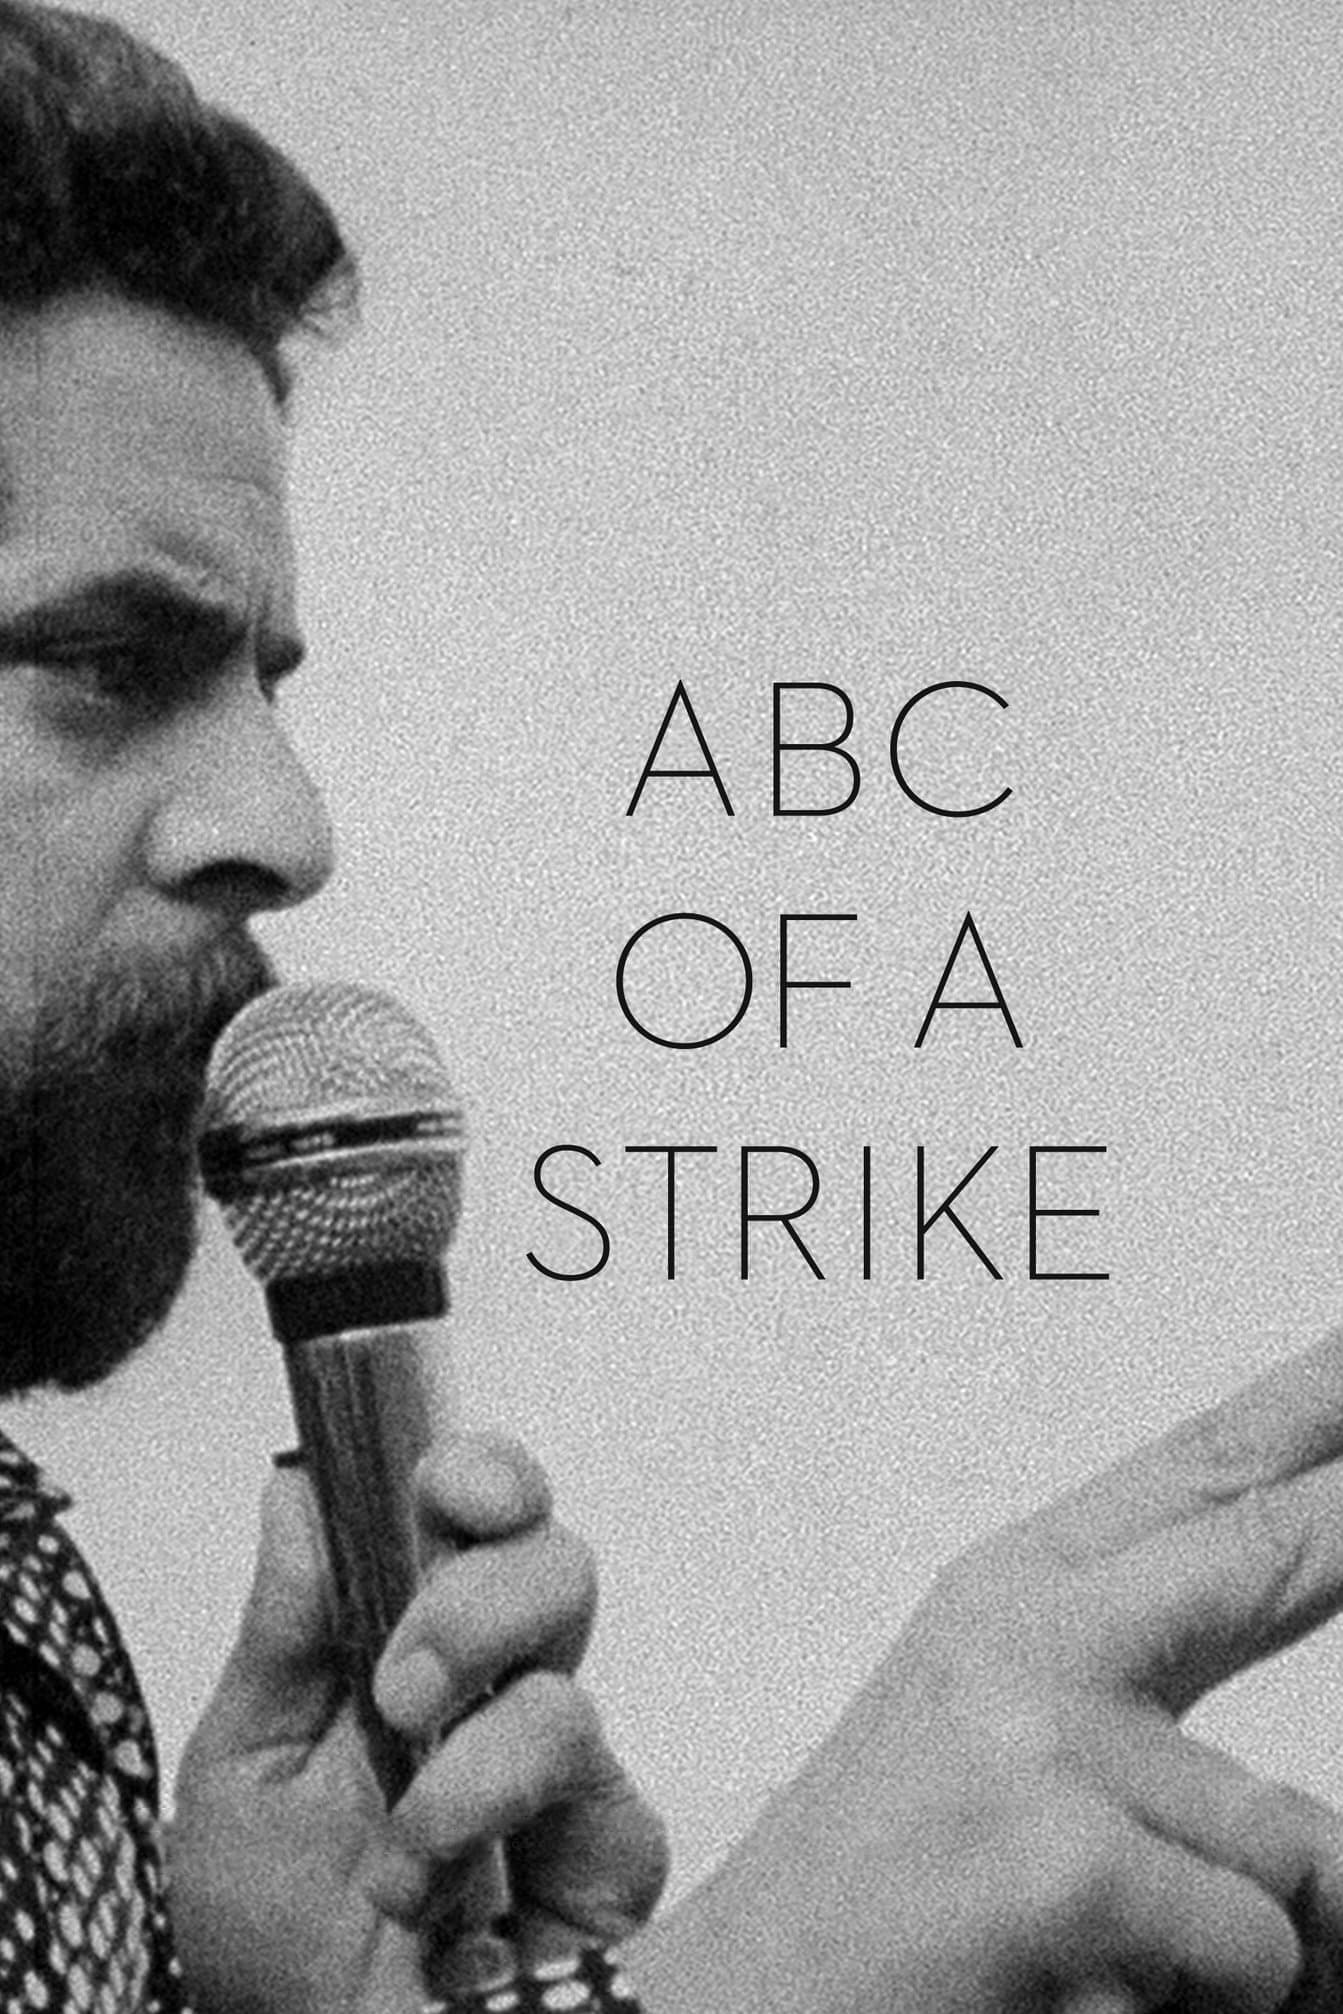 ABC of a Strike